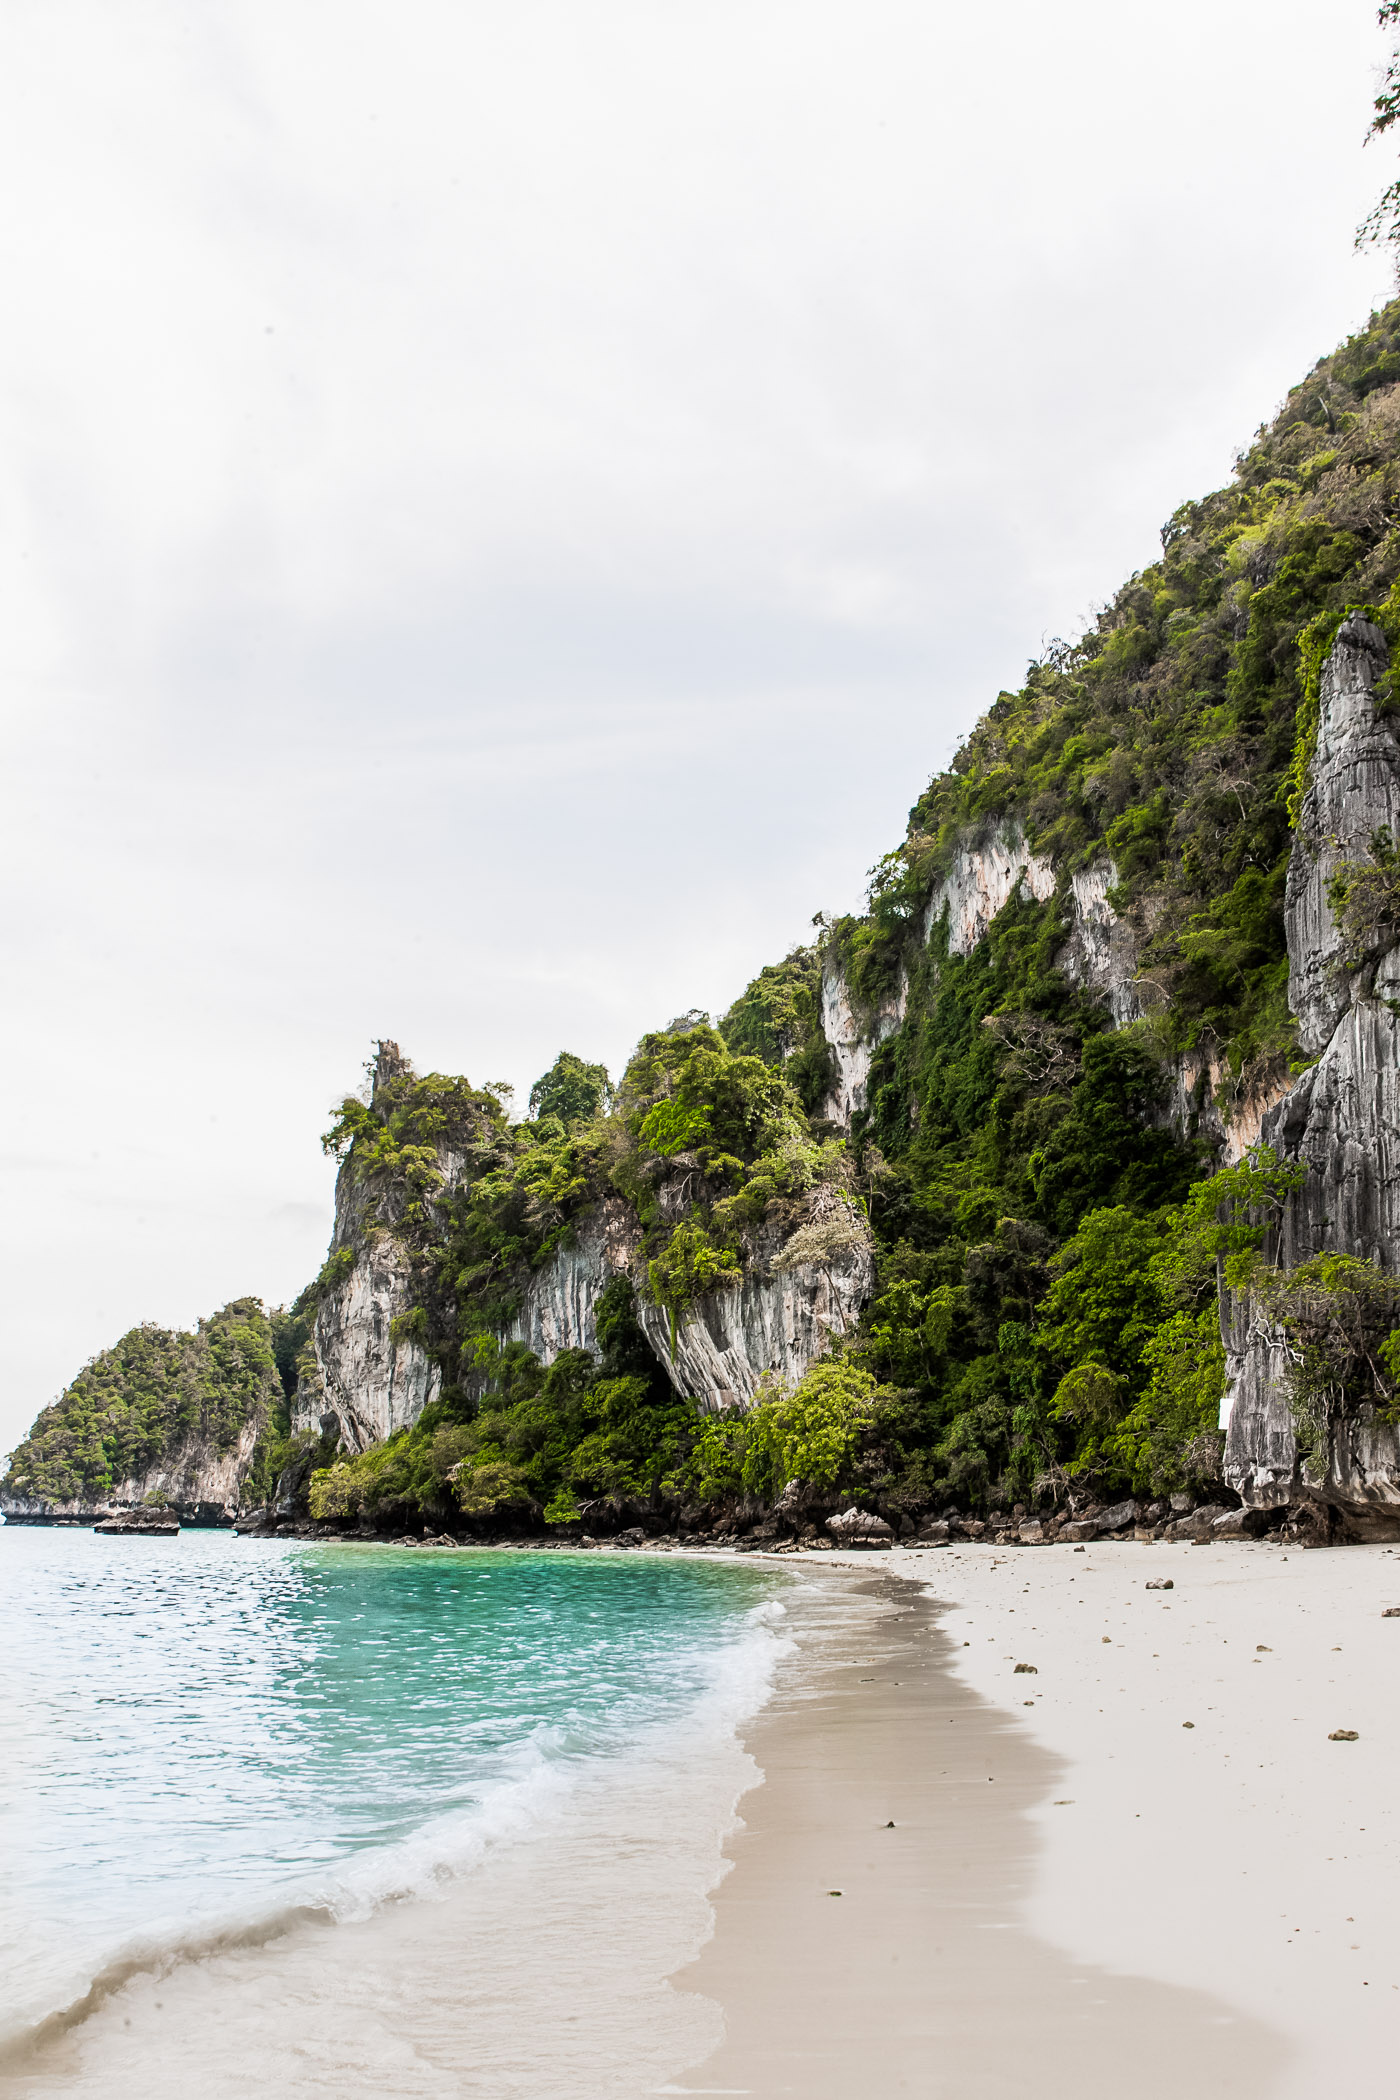 Phuket Thailand is on my 2018 Travel Wishlist